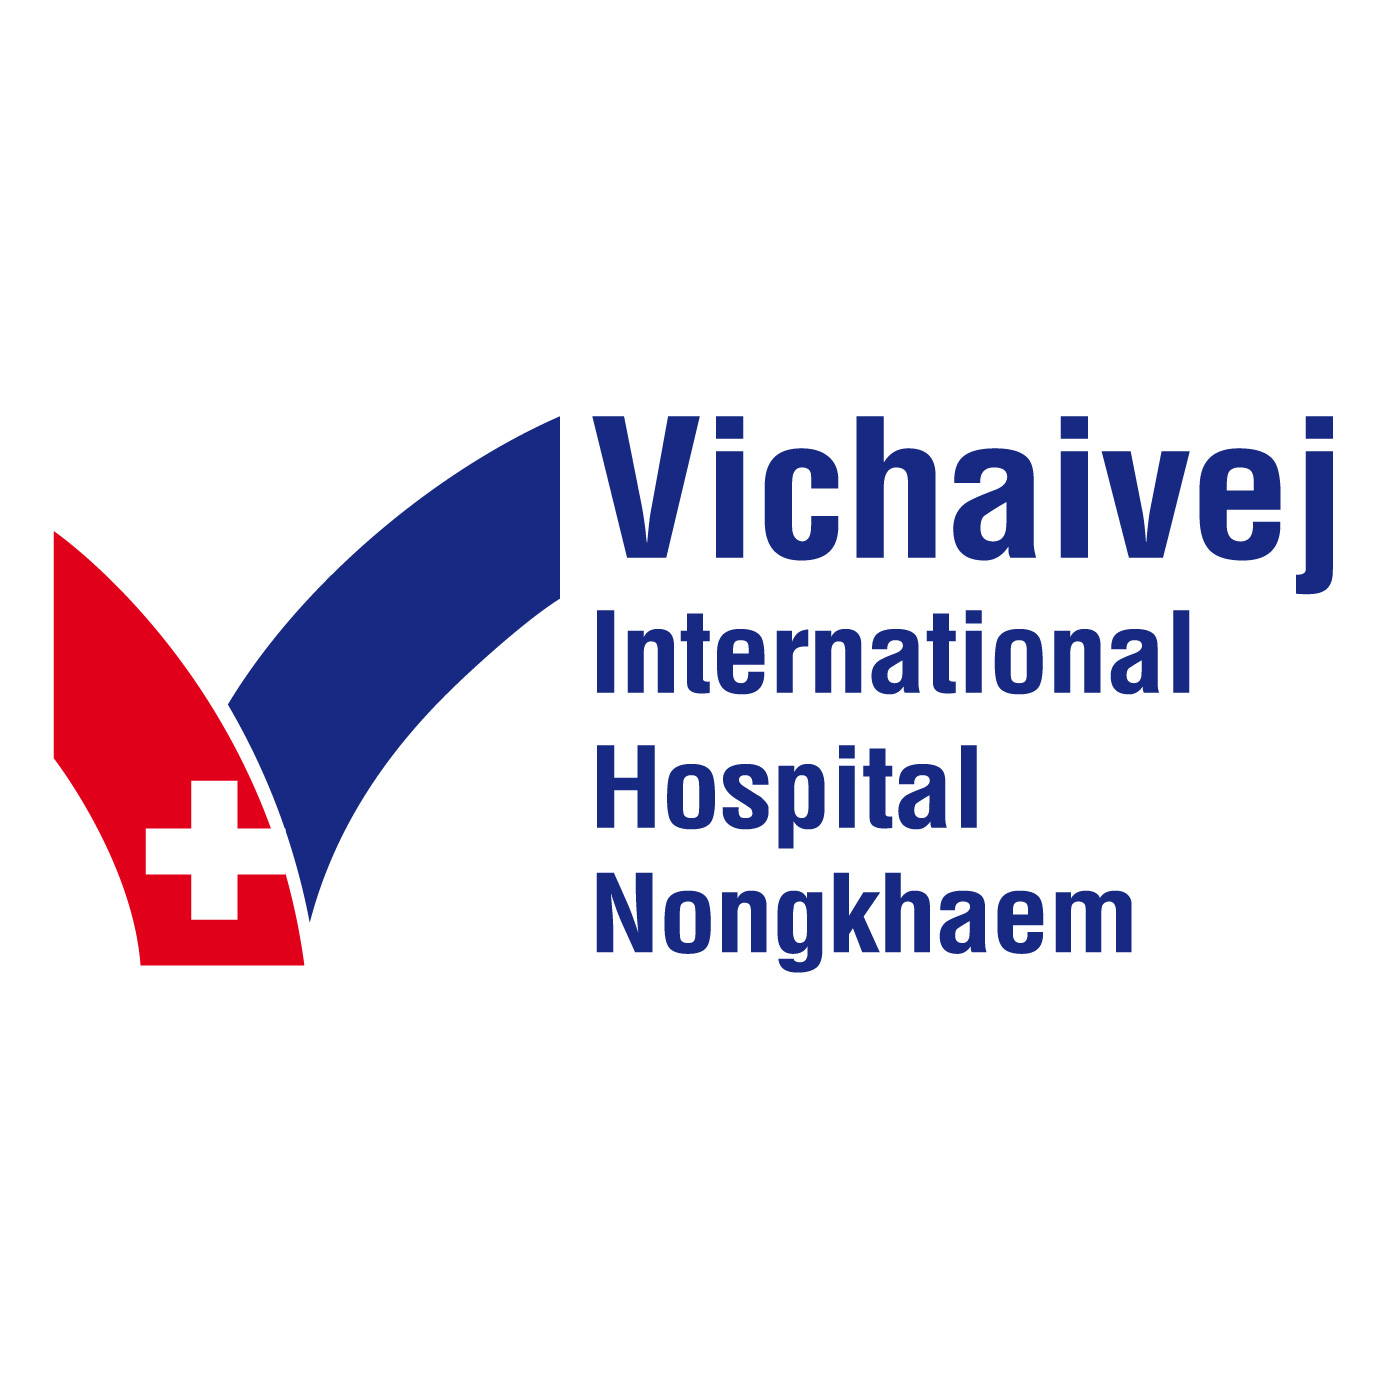 Vichaivej International Hospital Nongkhaem 01